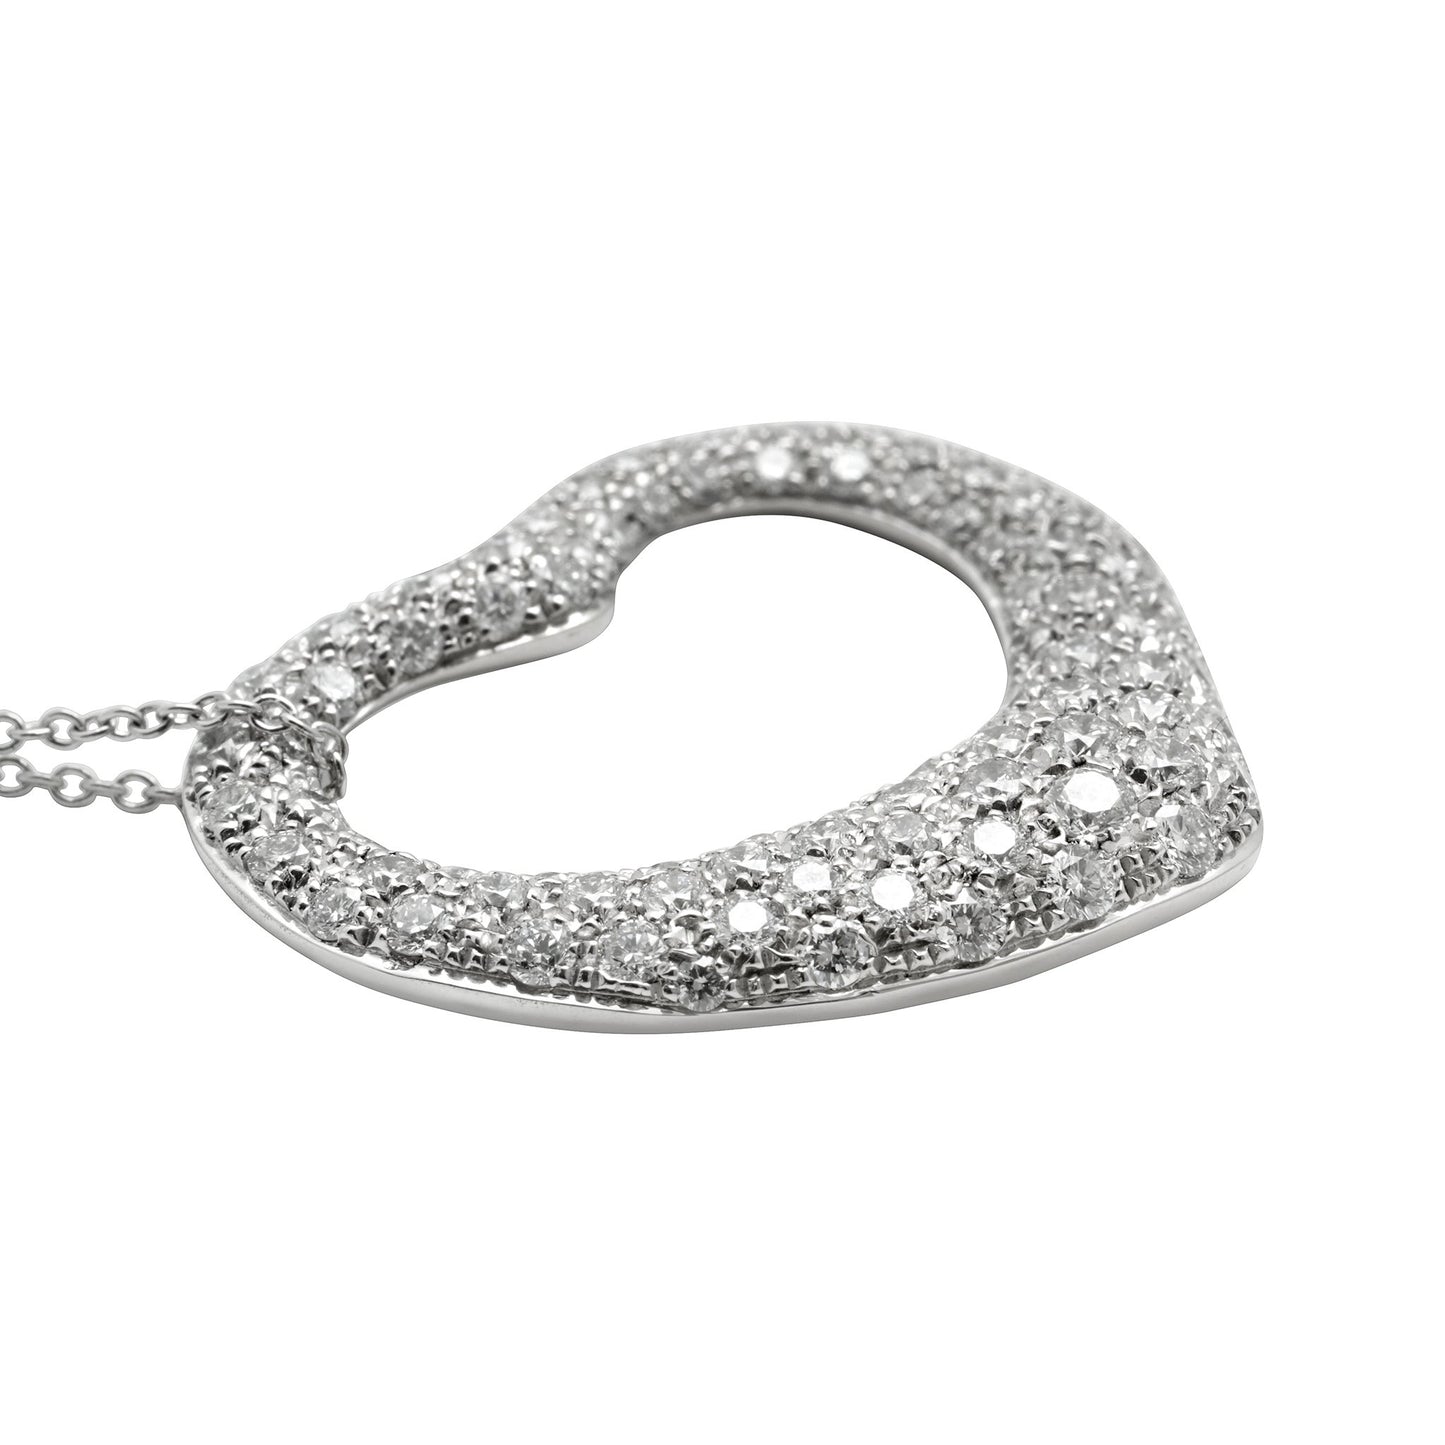 Tiffany & Co. by Elsa Peretti - Open Heart Necklace